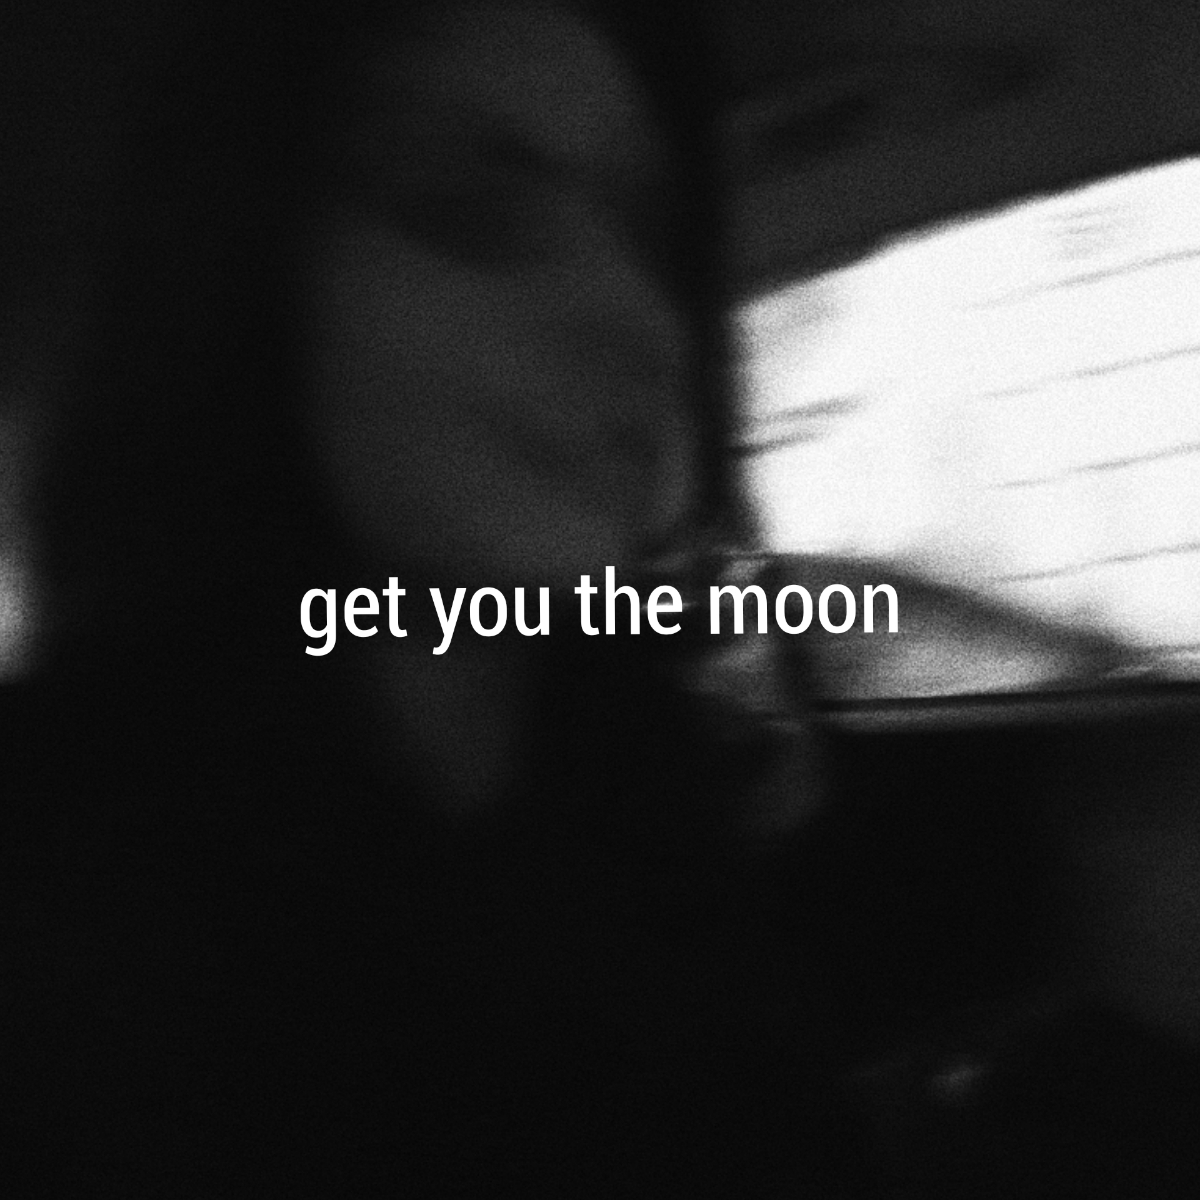 Nedlasting Kina - get you the moon (ft. Snow)